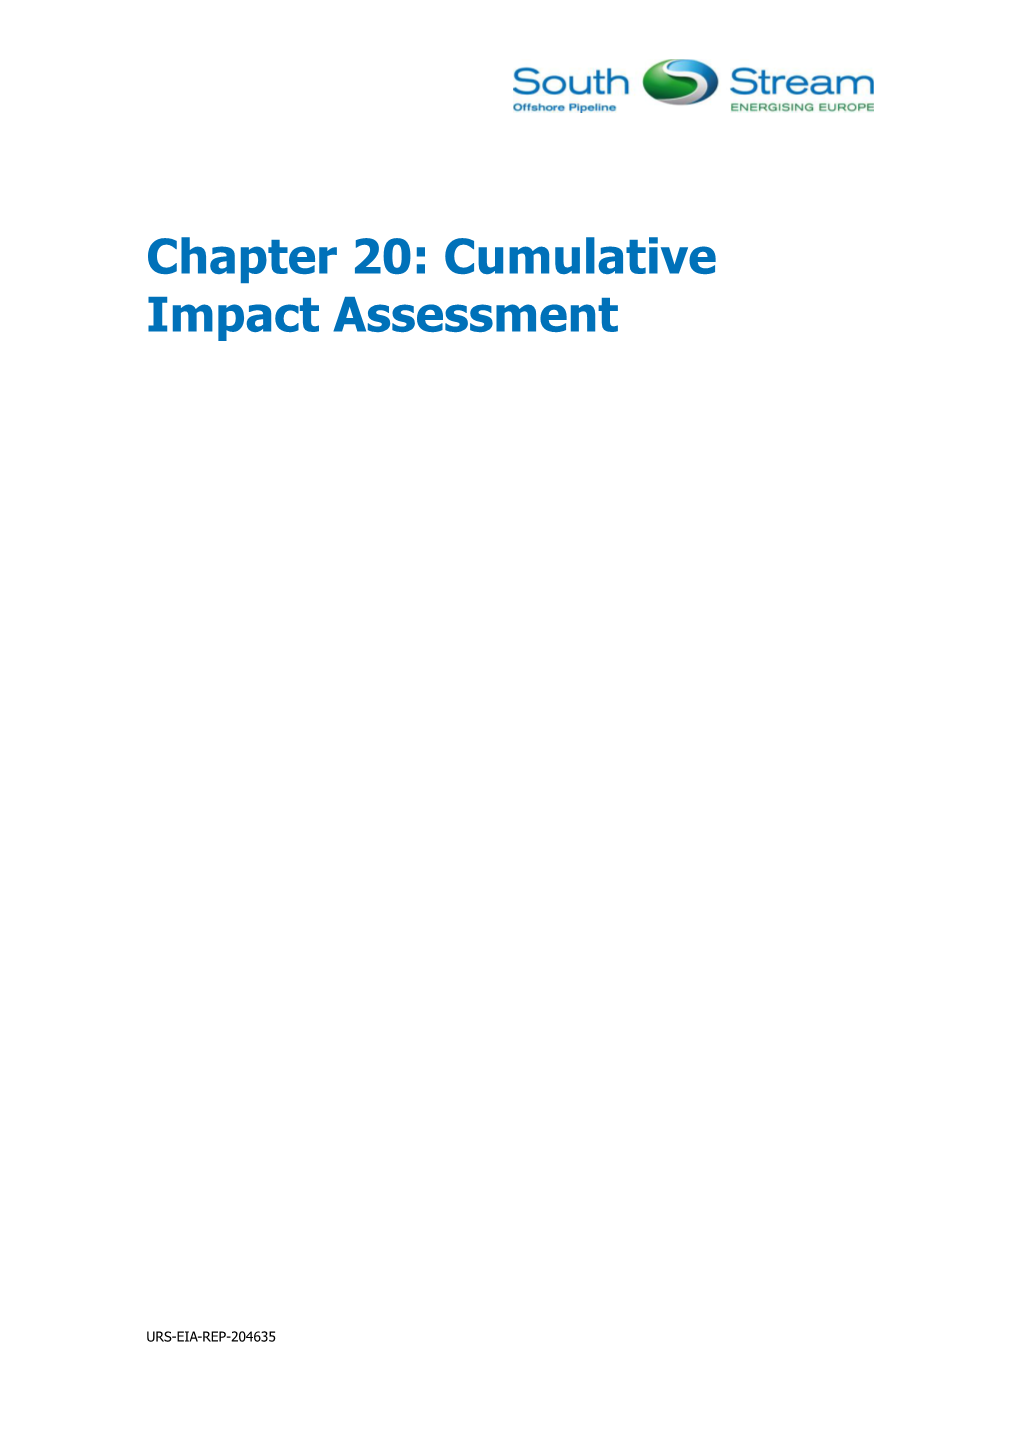 Chapter 20: Cumulative Impact Assessment